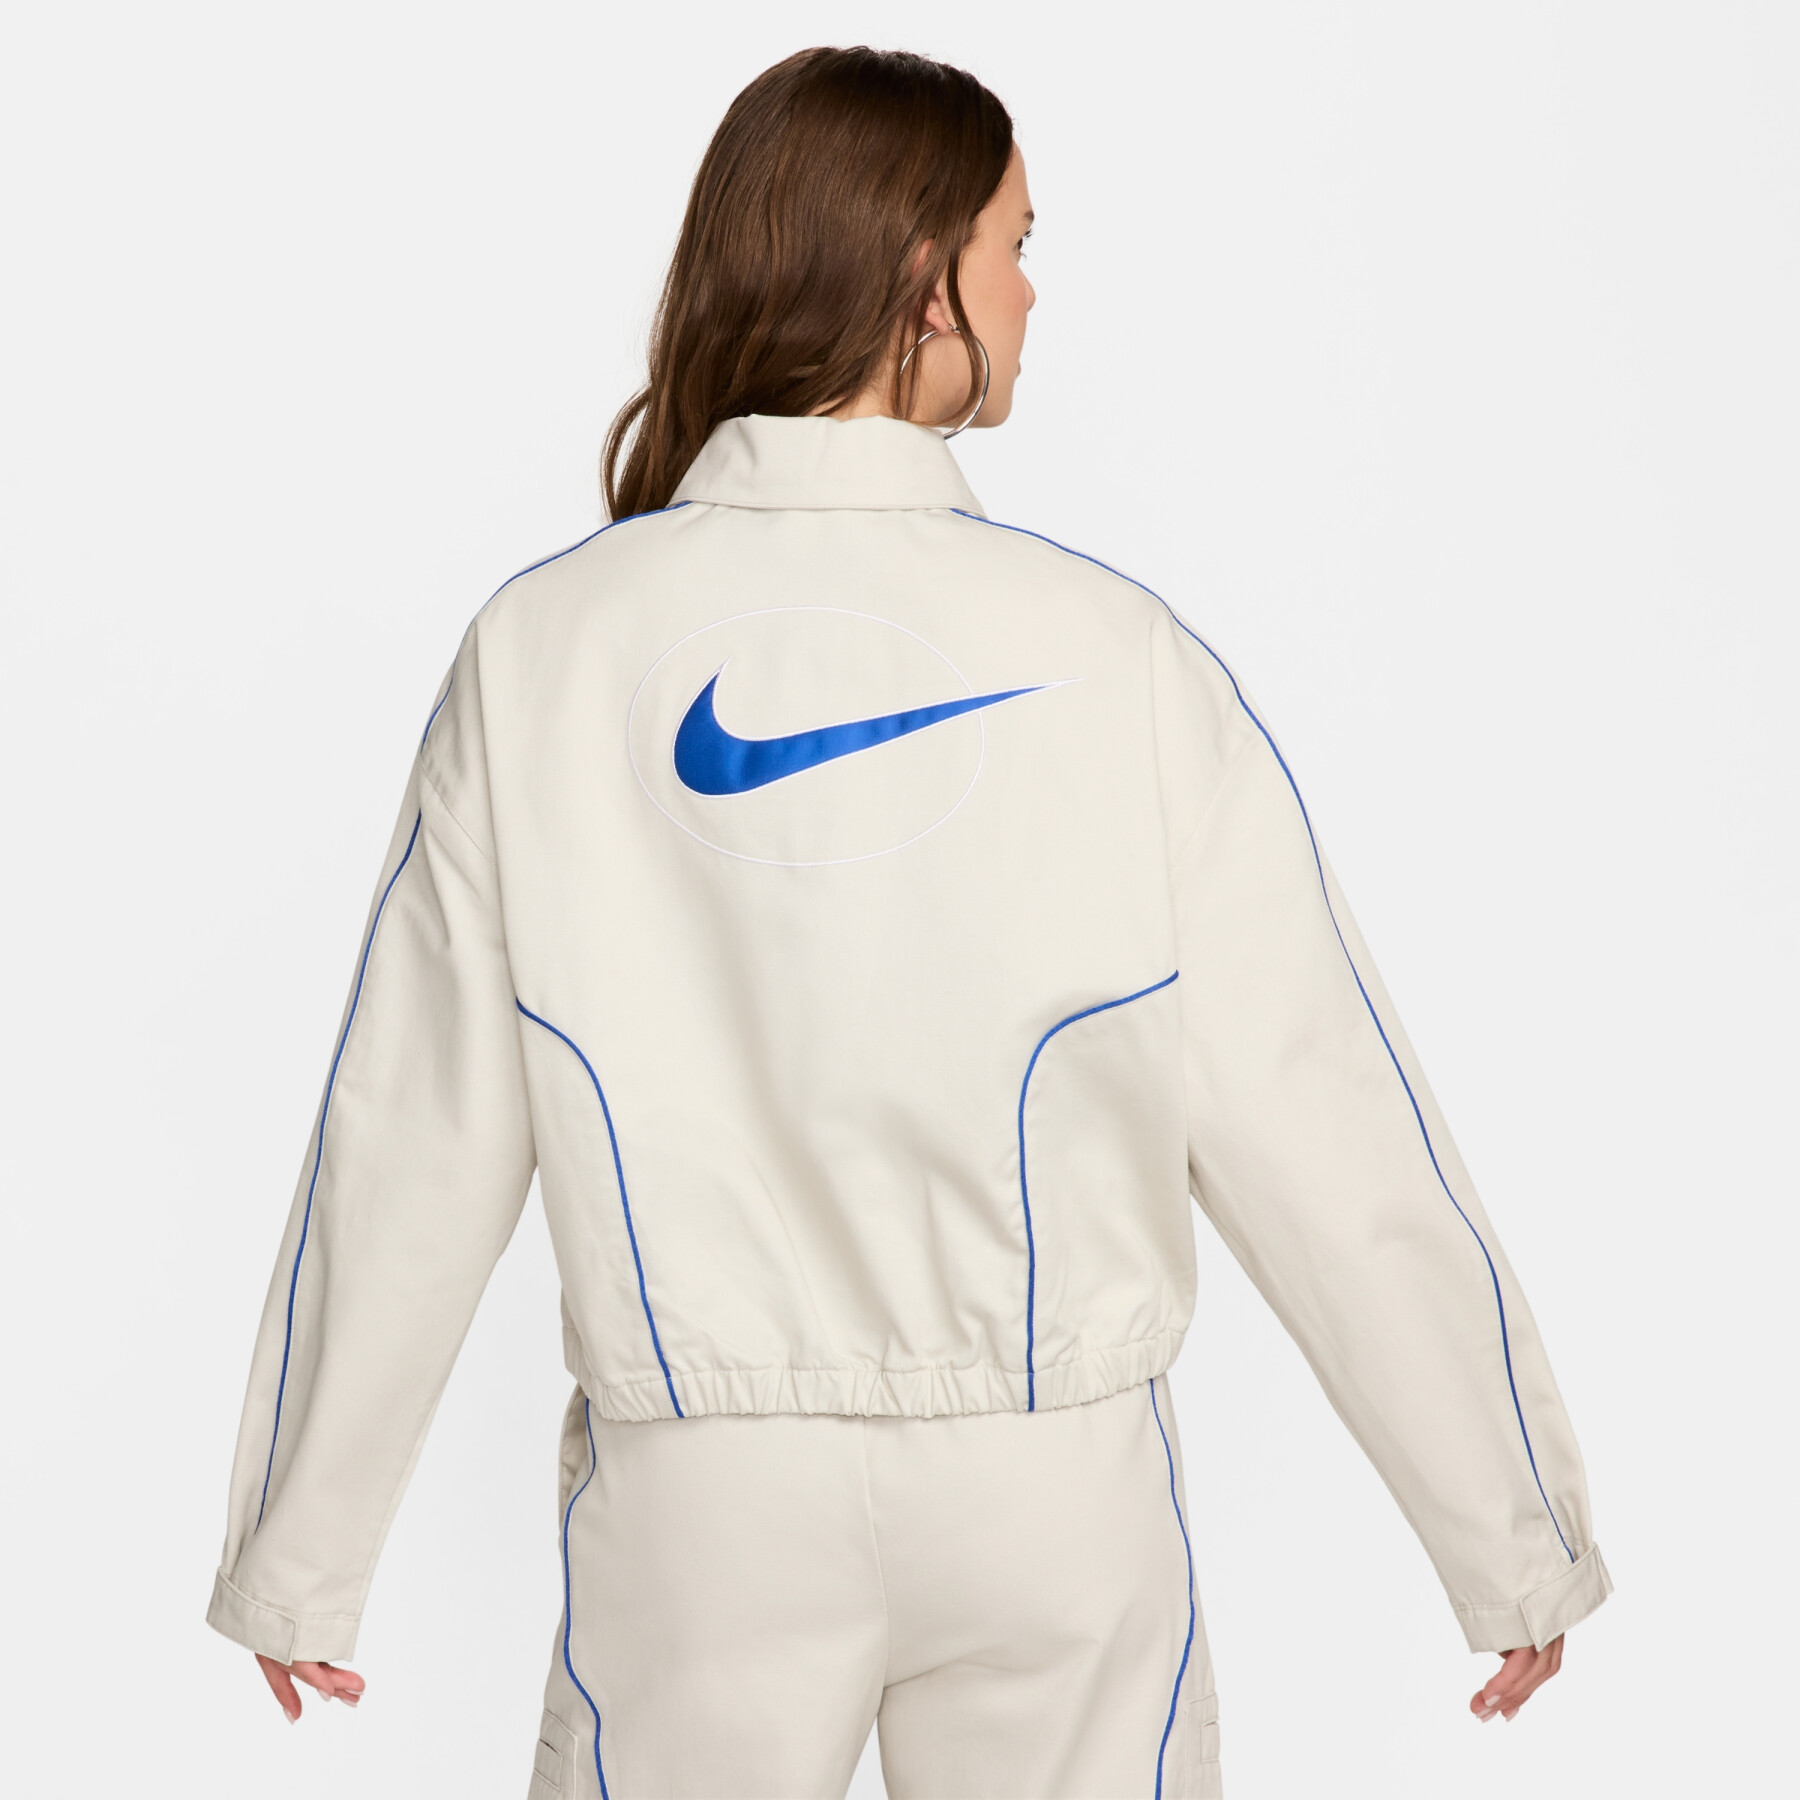 Veste oversize femme Nike